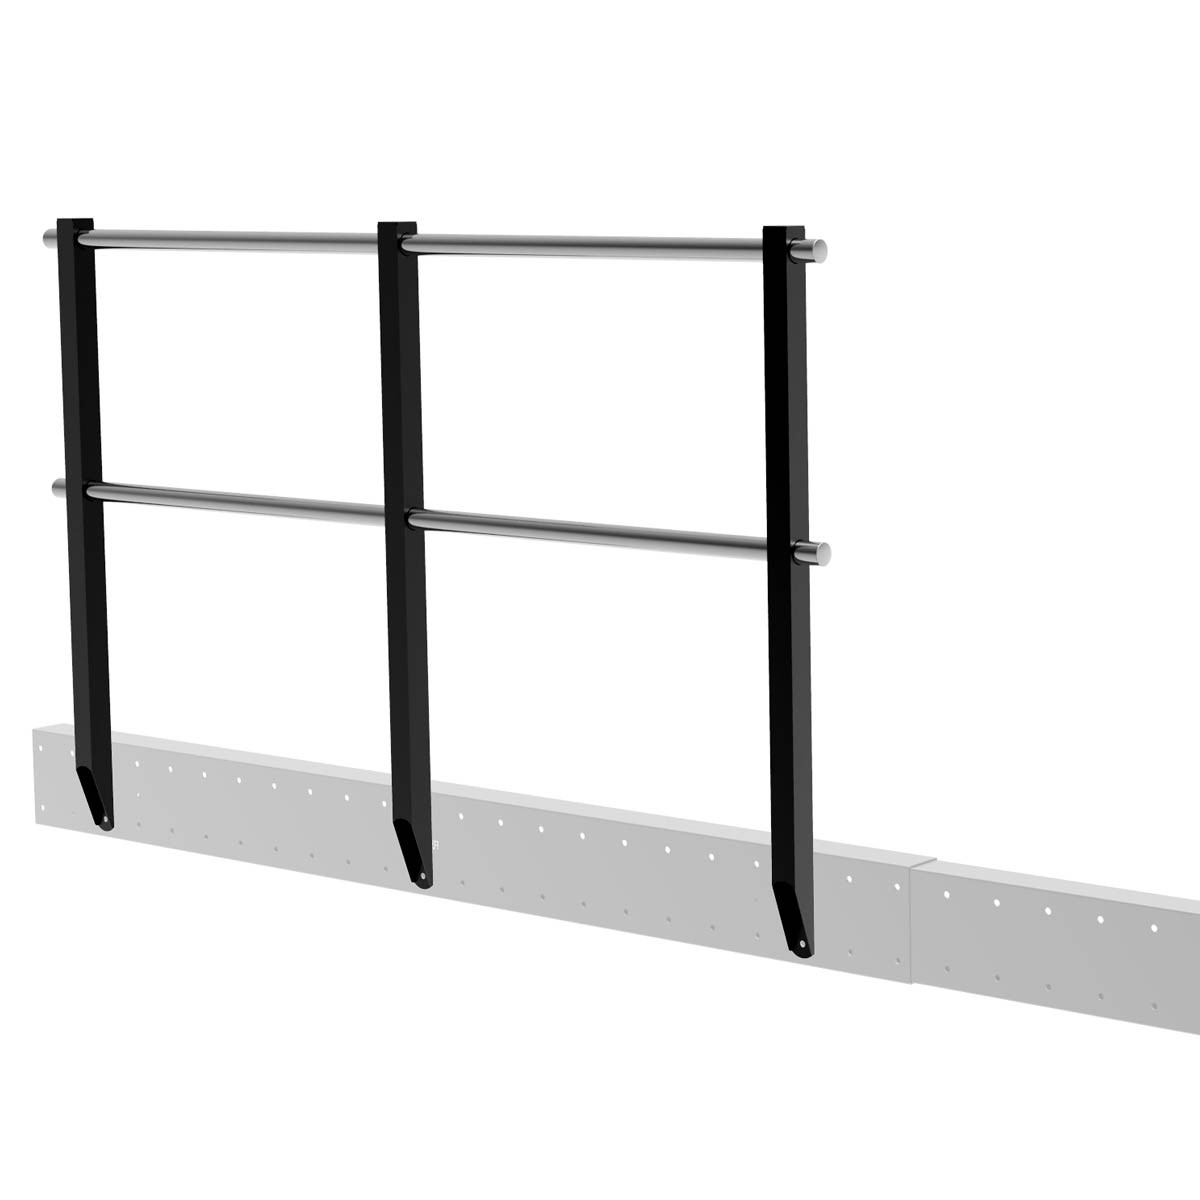 Standard railings